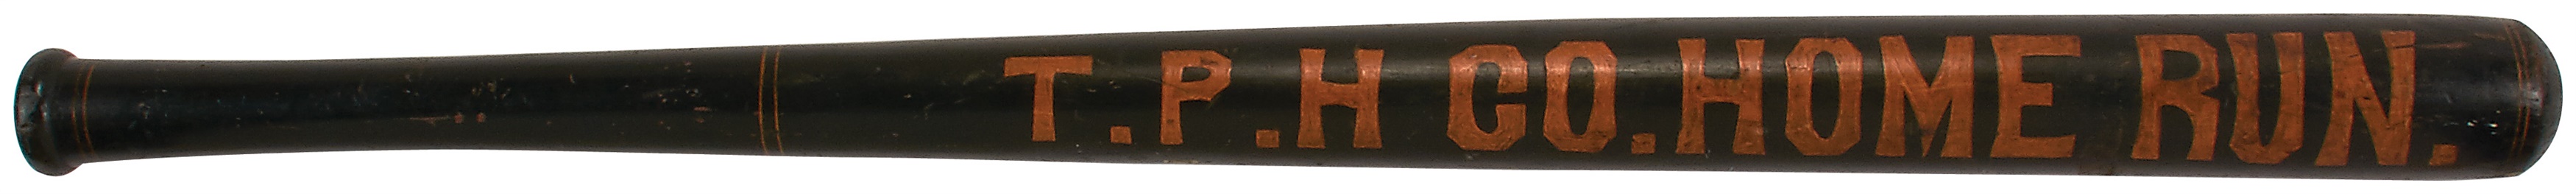 Antique Sporting Goods - 1880s "Home Run" Baseball Bat Trade Sign